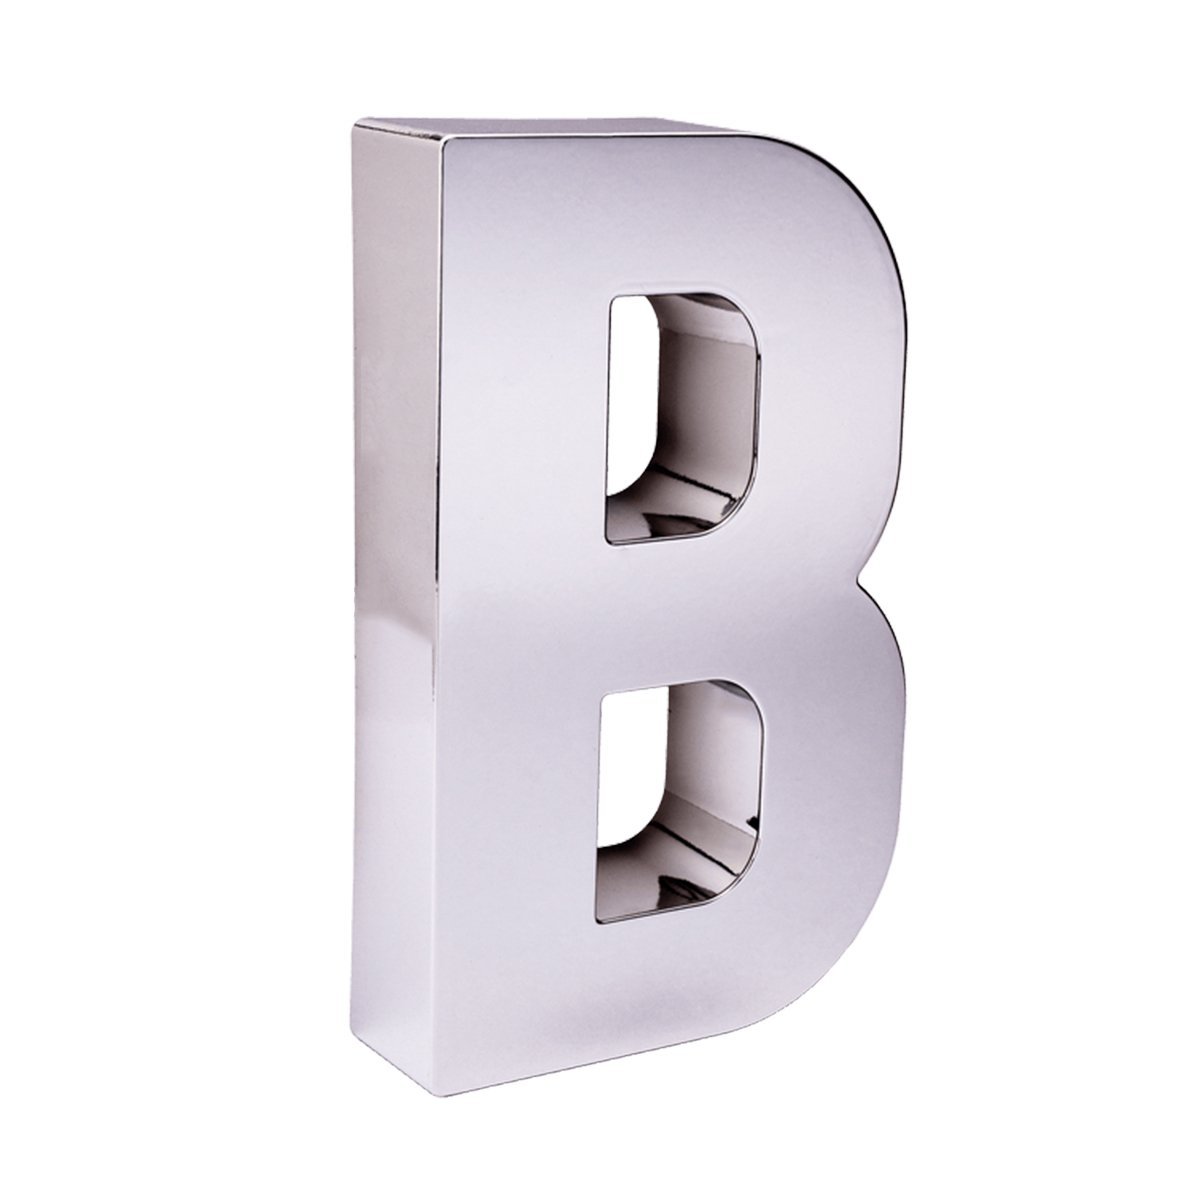 Números e Letras Residenciais / Comerciais Cromado 3D 19cm:B